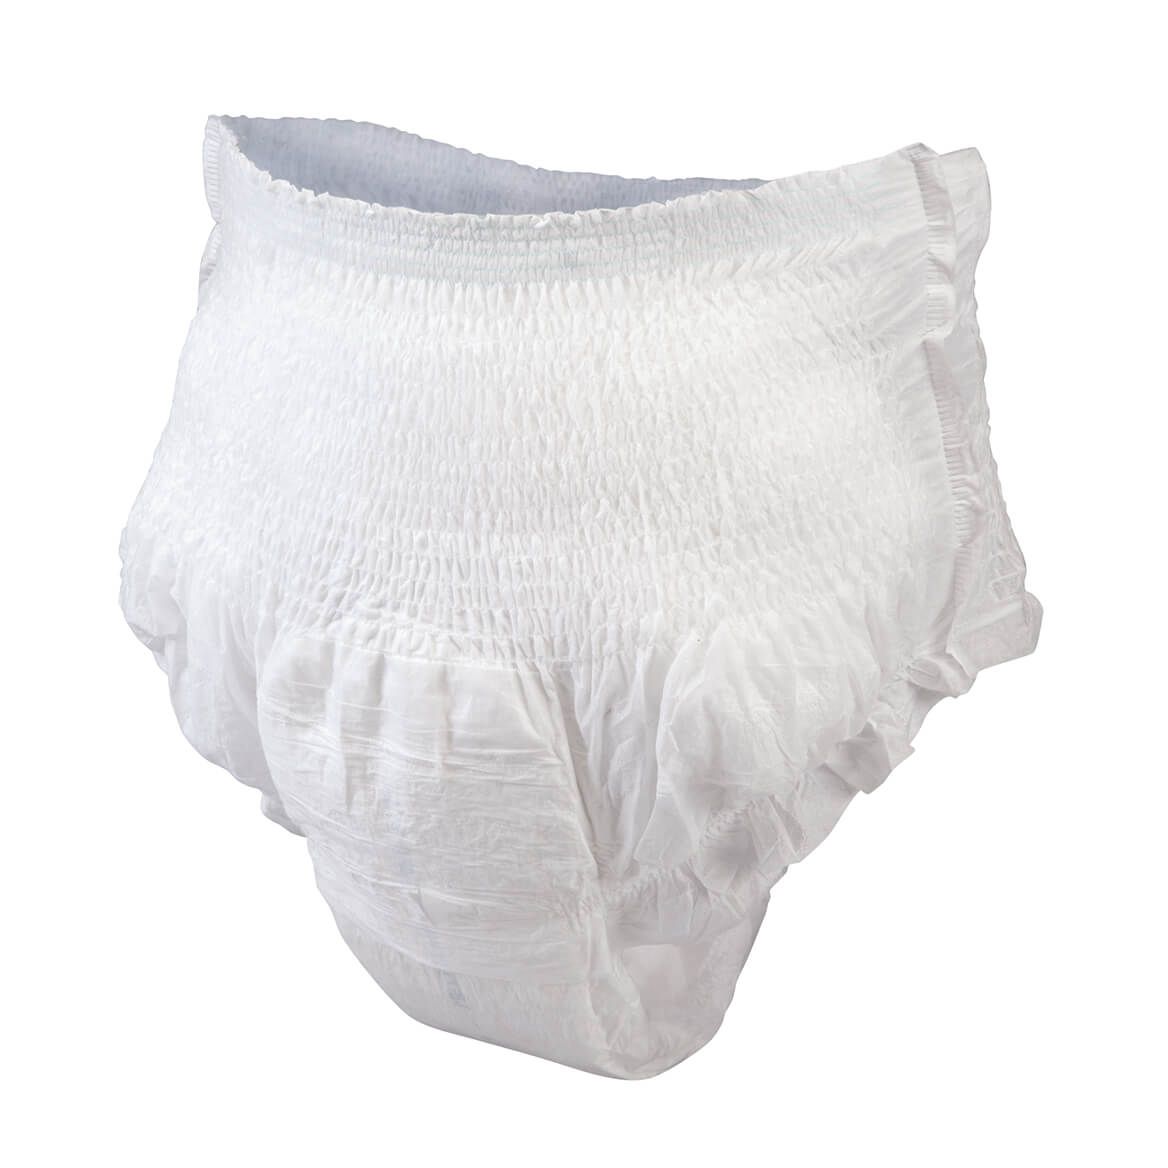 Unisex Overnight Protective Underwear, case + '-' + 344825